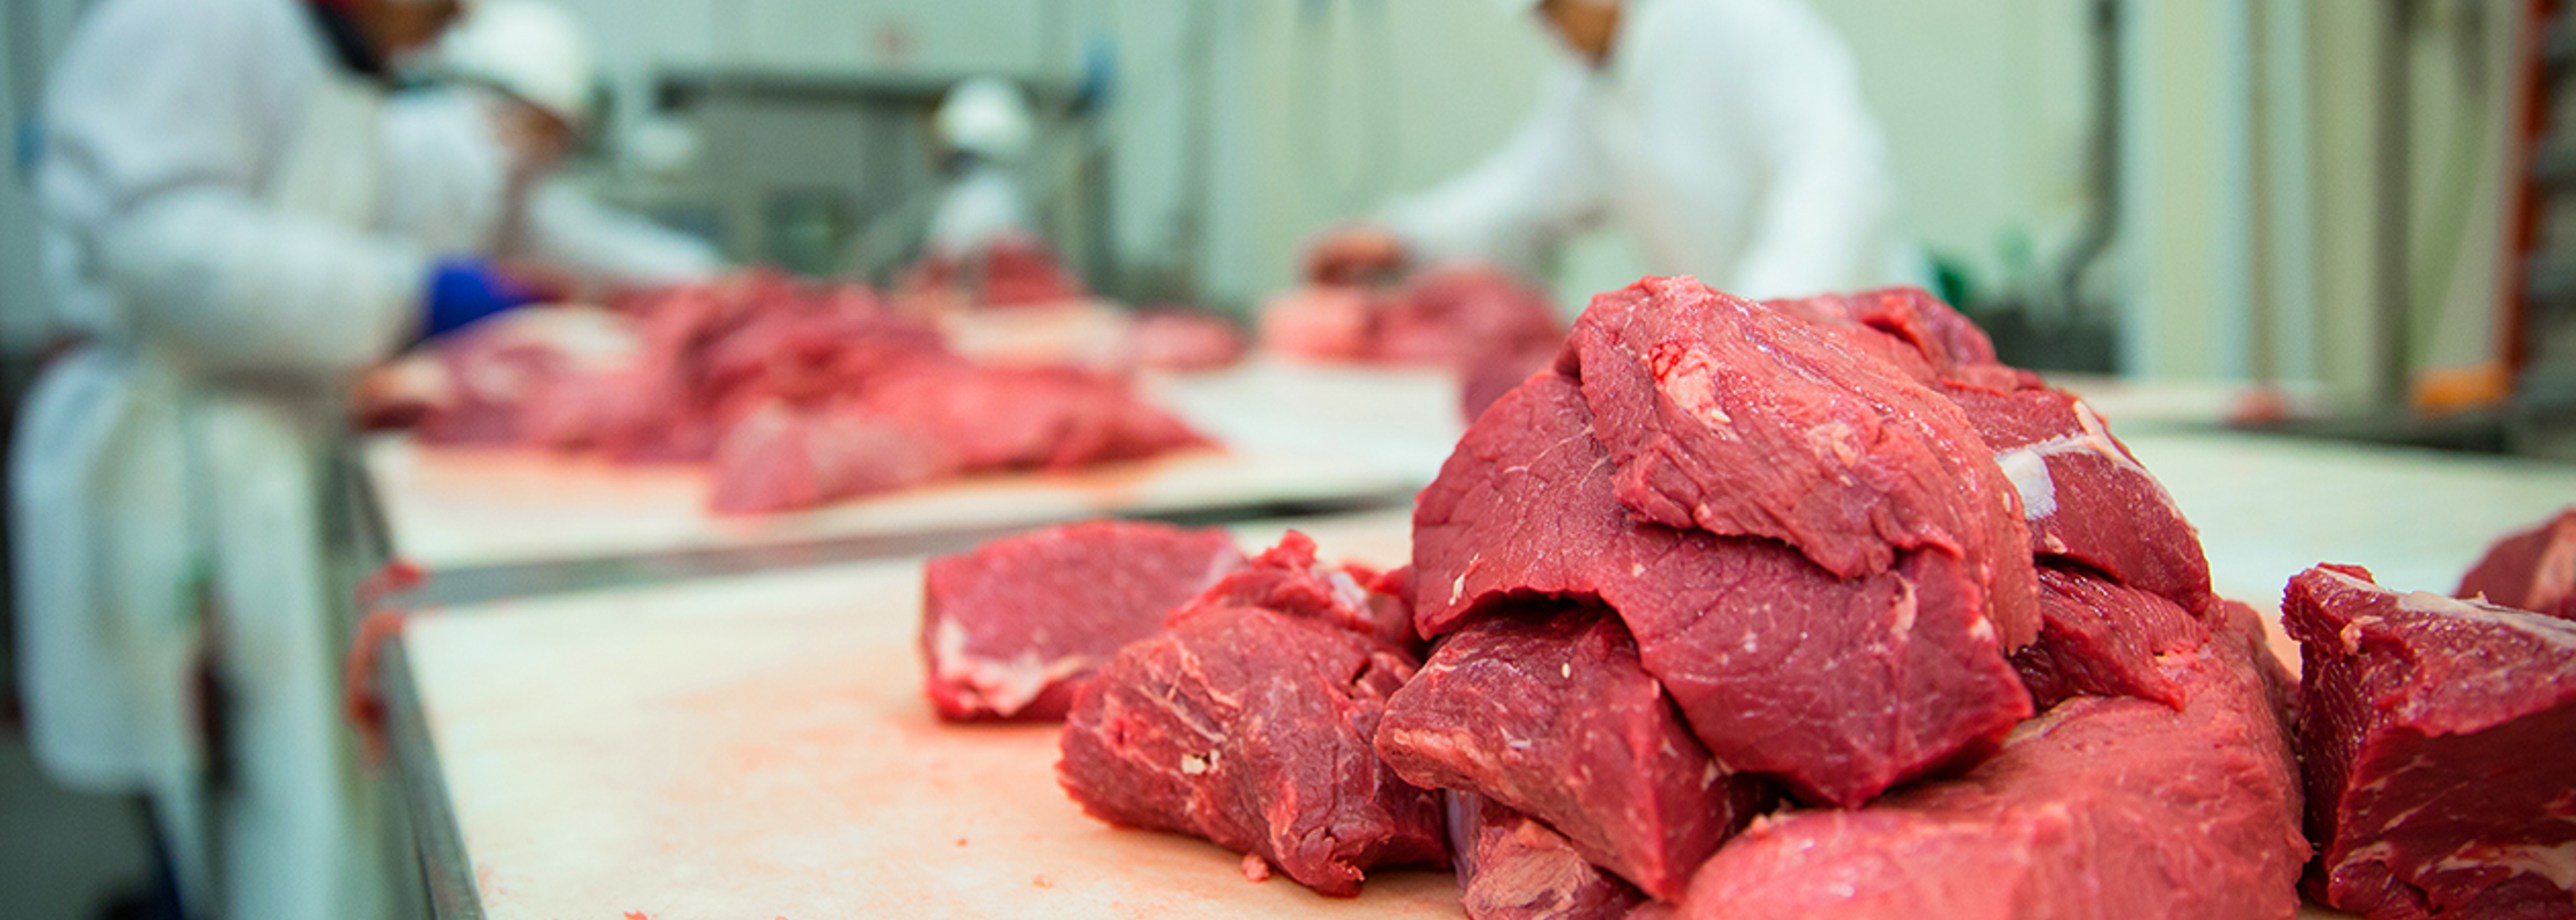 UK meat industry message undermines scientific evidence